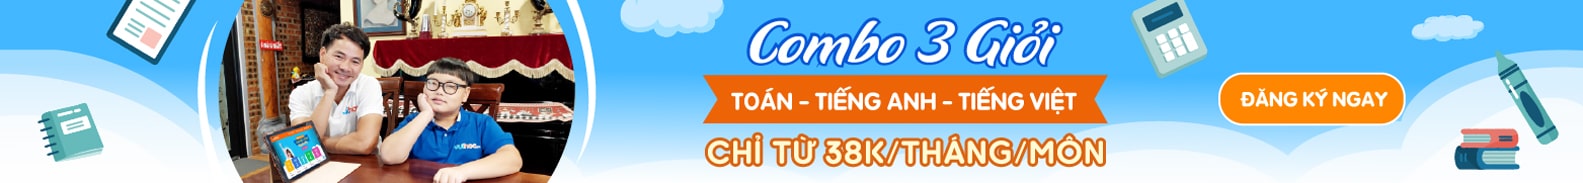 Combo 3 giỏi: Toán - Tiếng Việt - Tiếng Anh